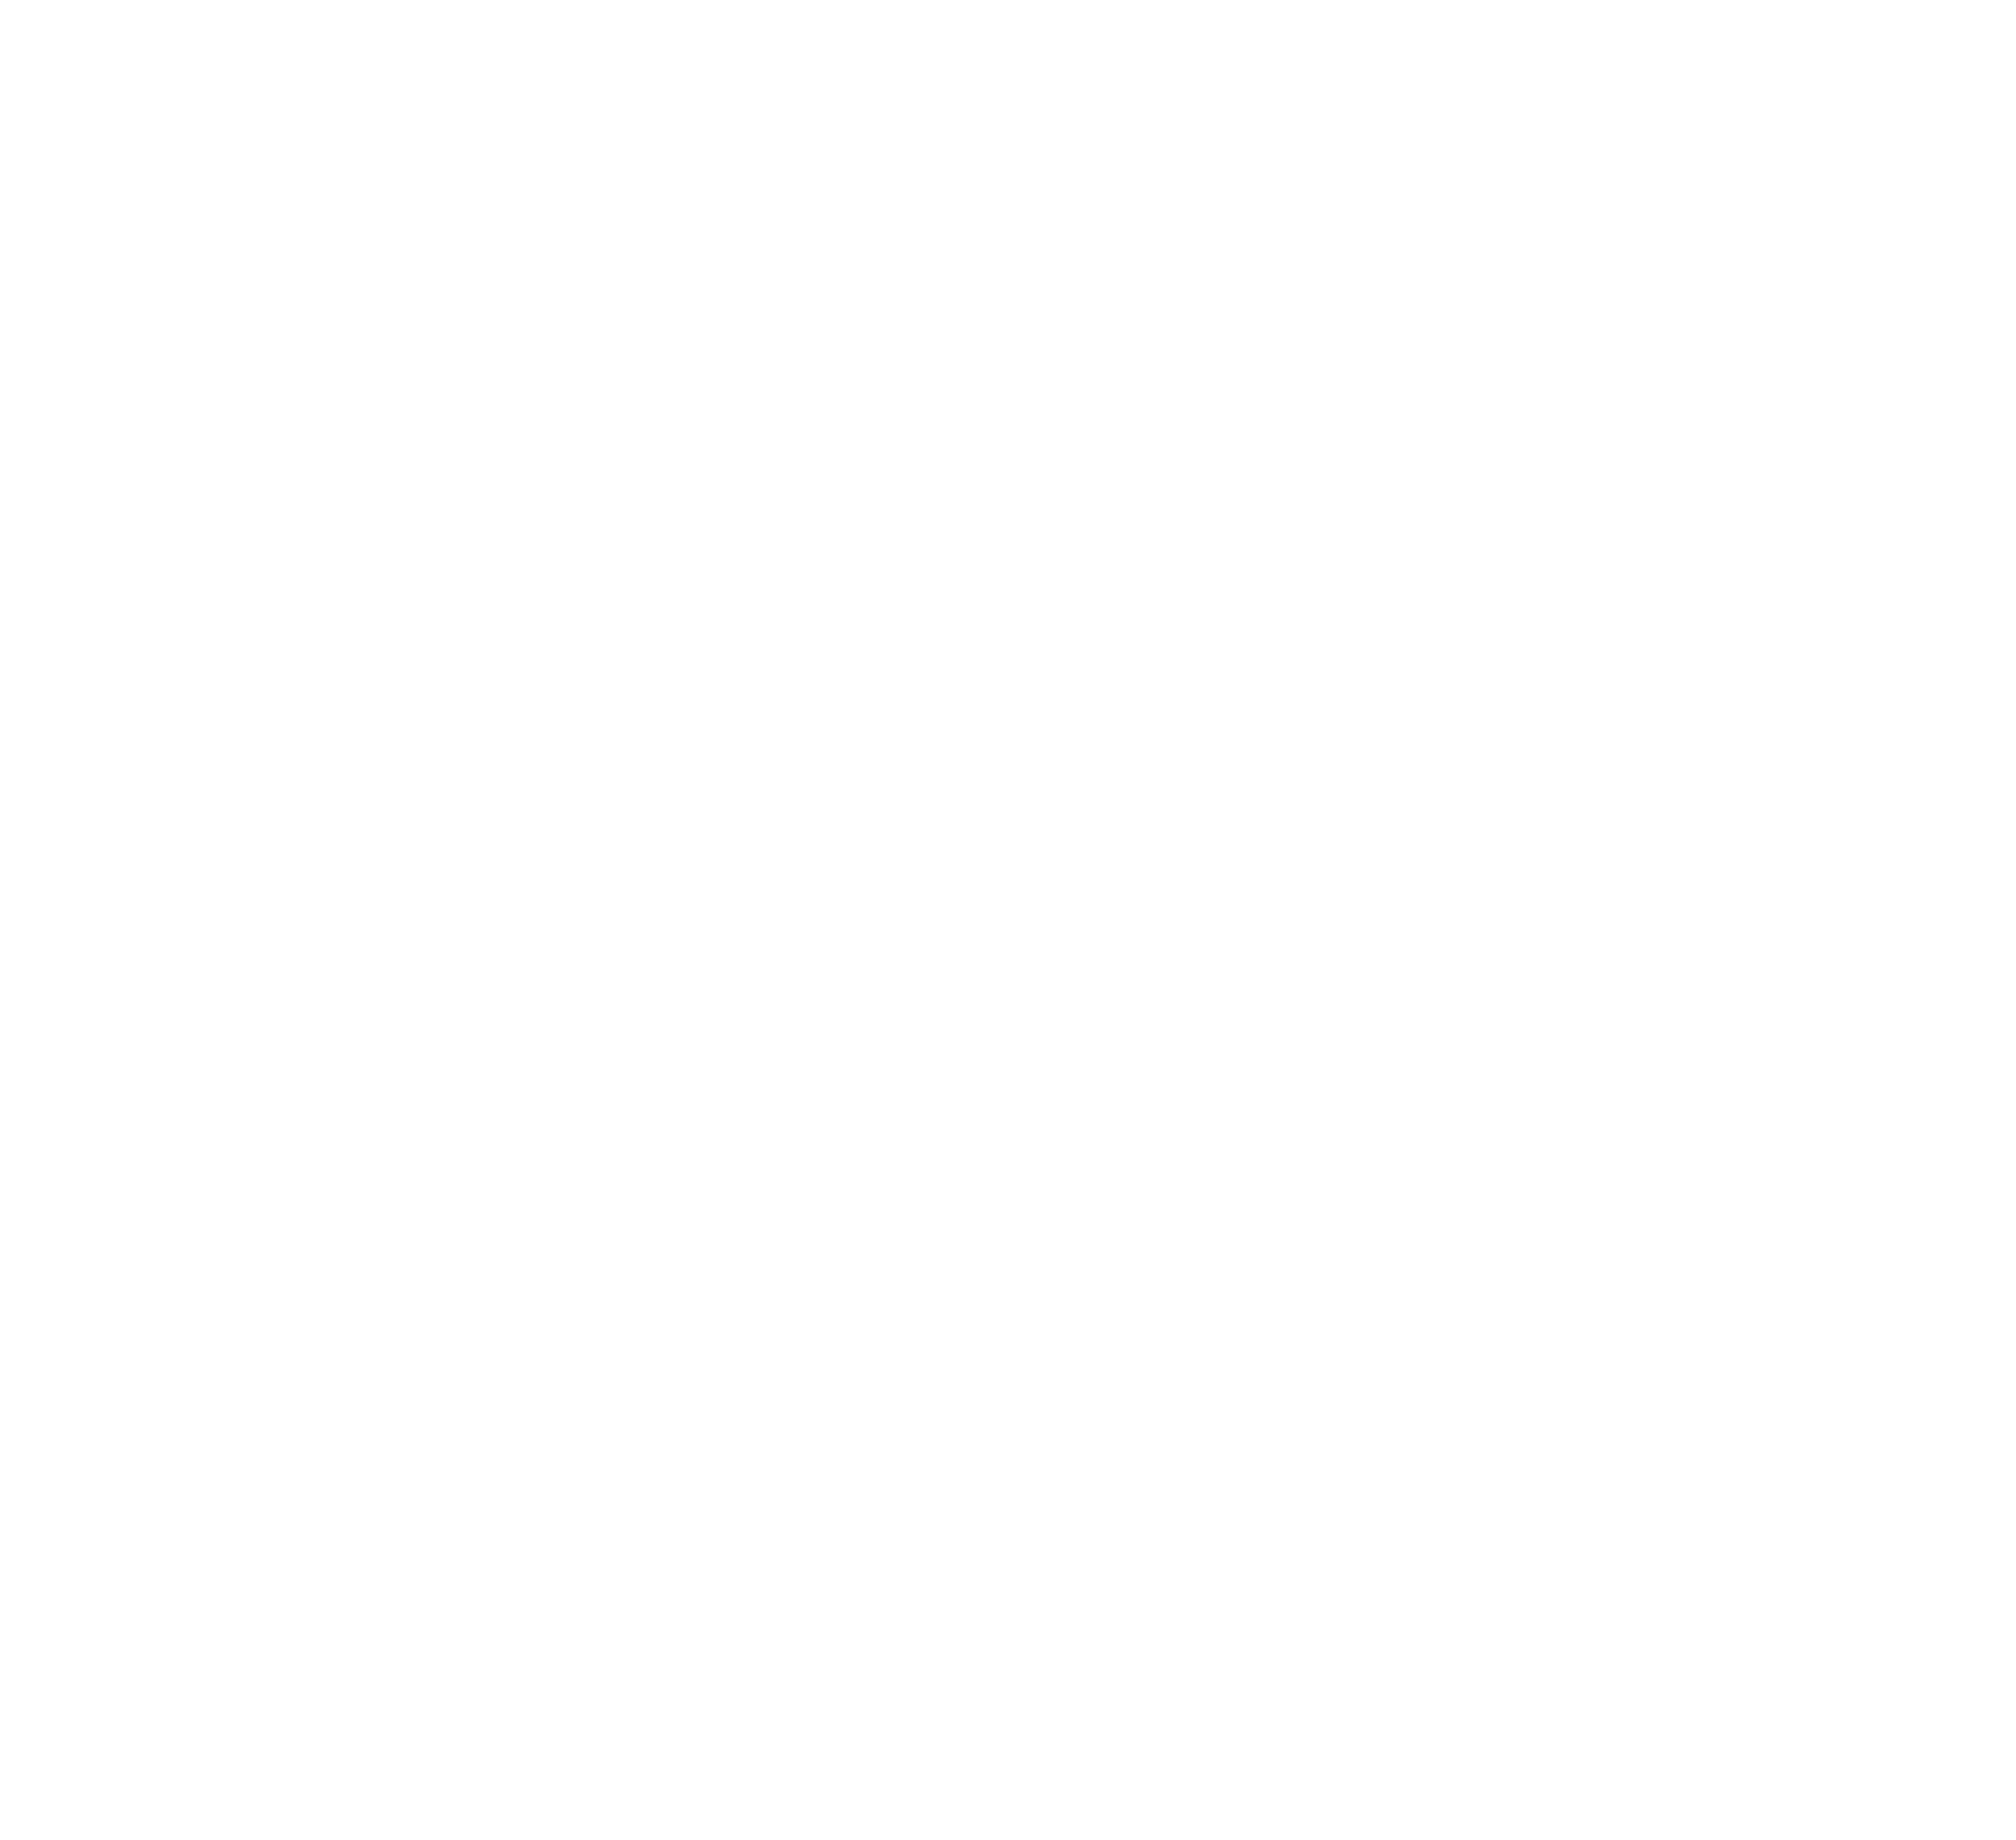 Teresa Gabriel